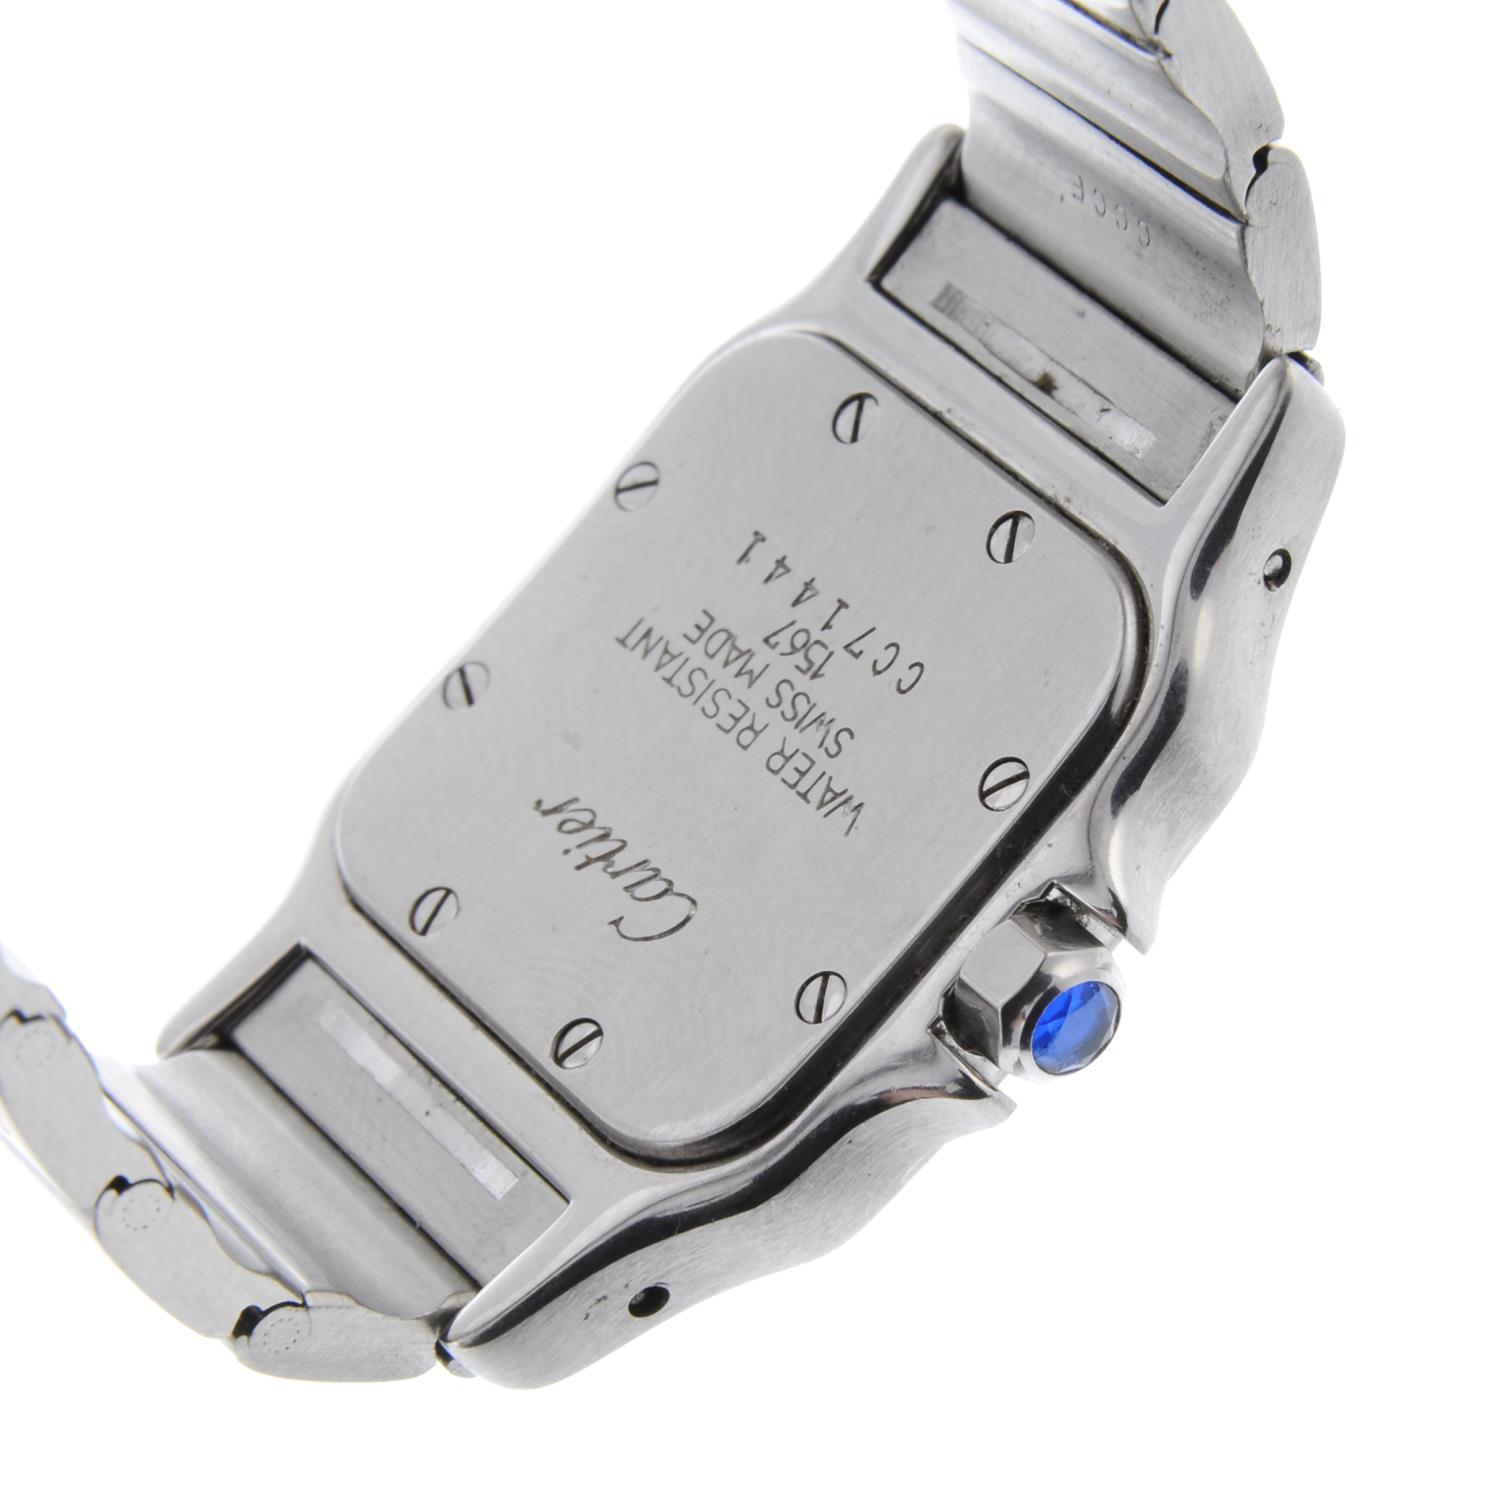 CARTIER - a lady's Santos bracelet watch. - Image 2 of 5